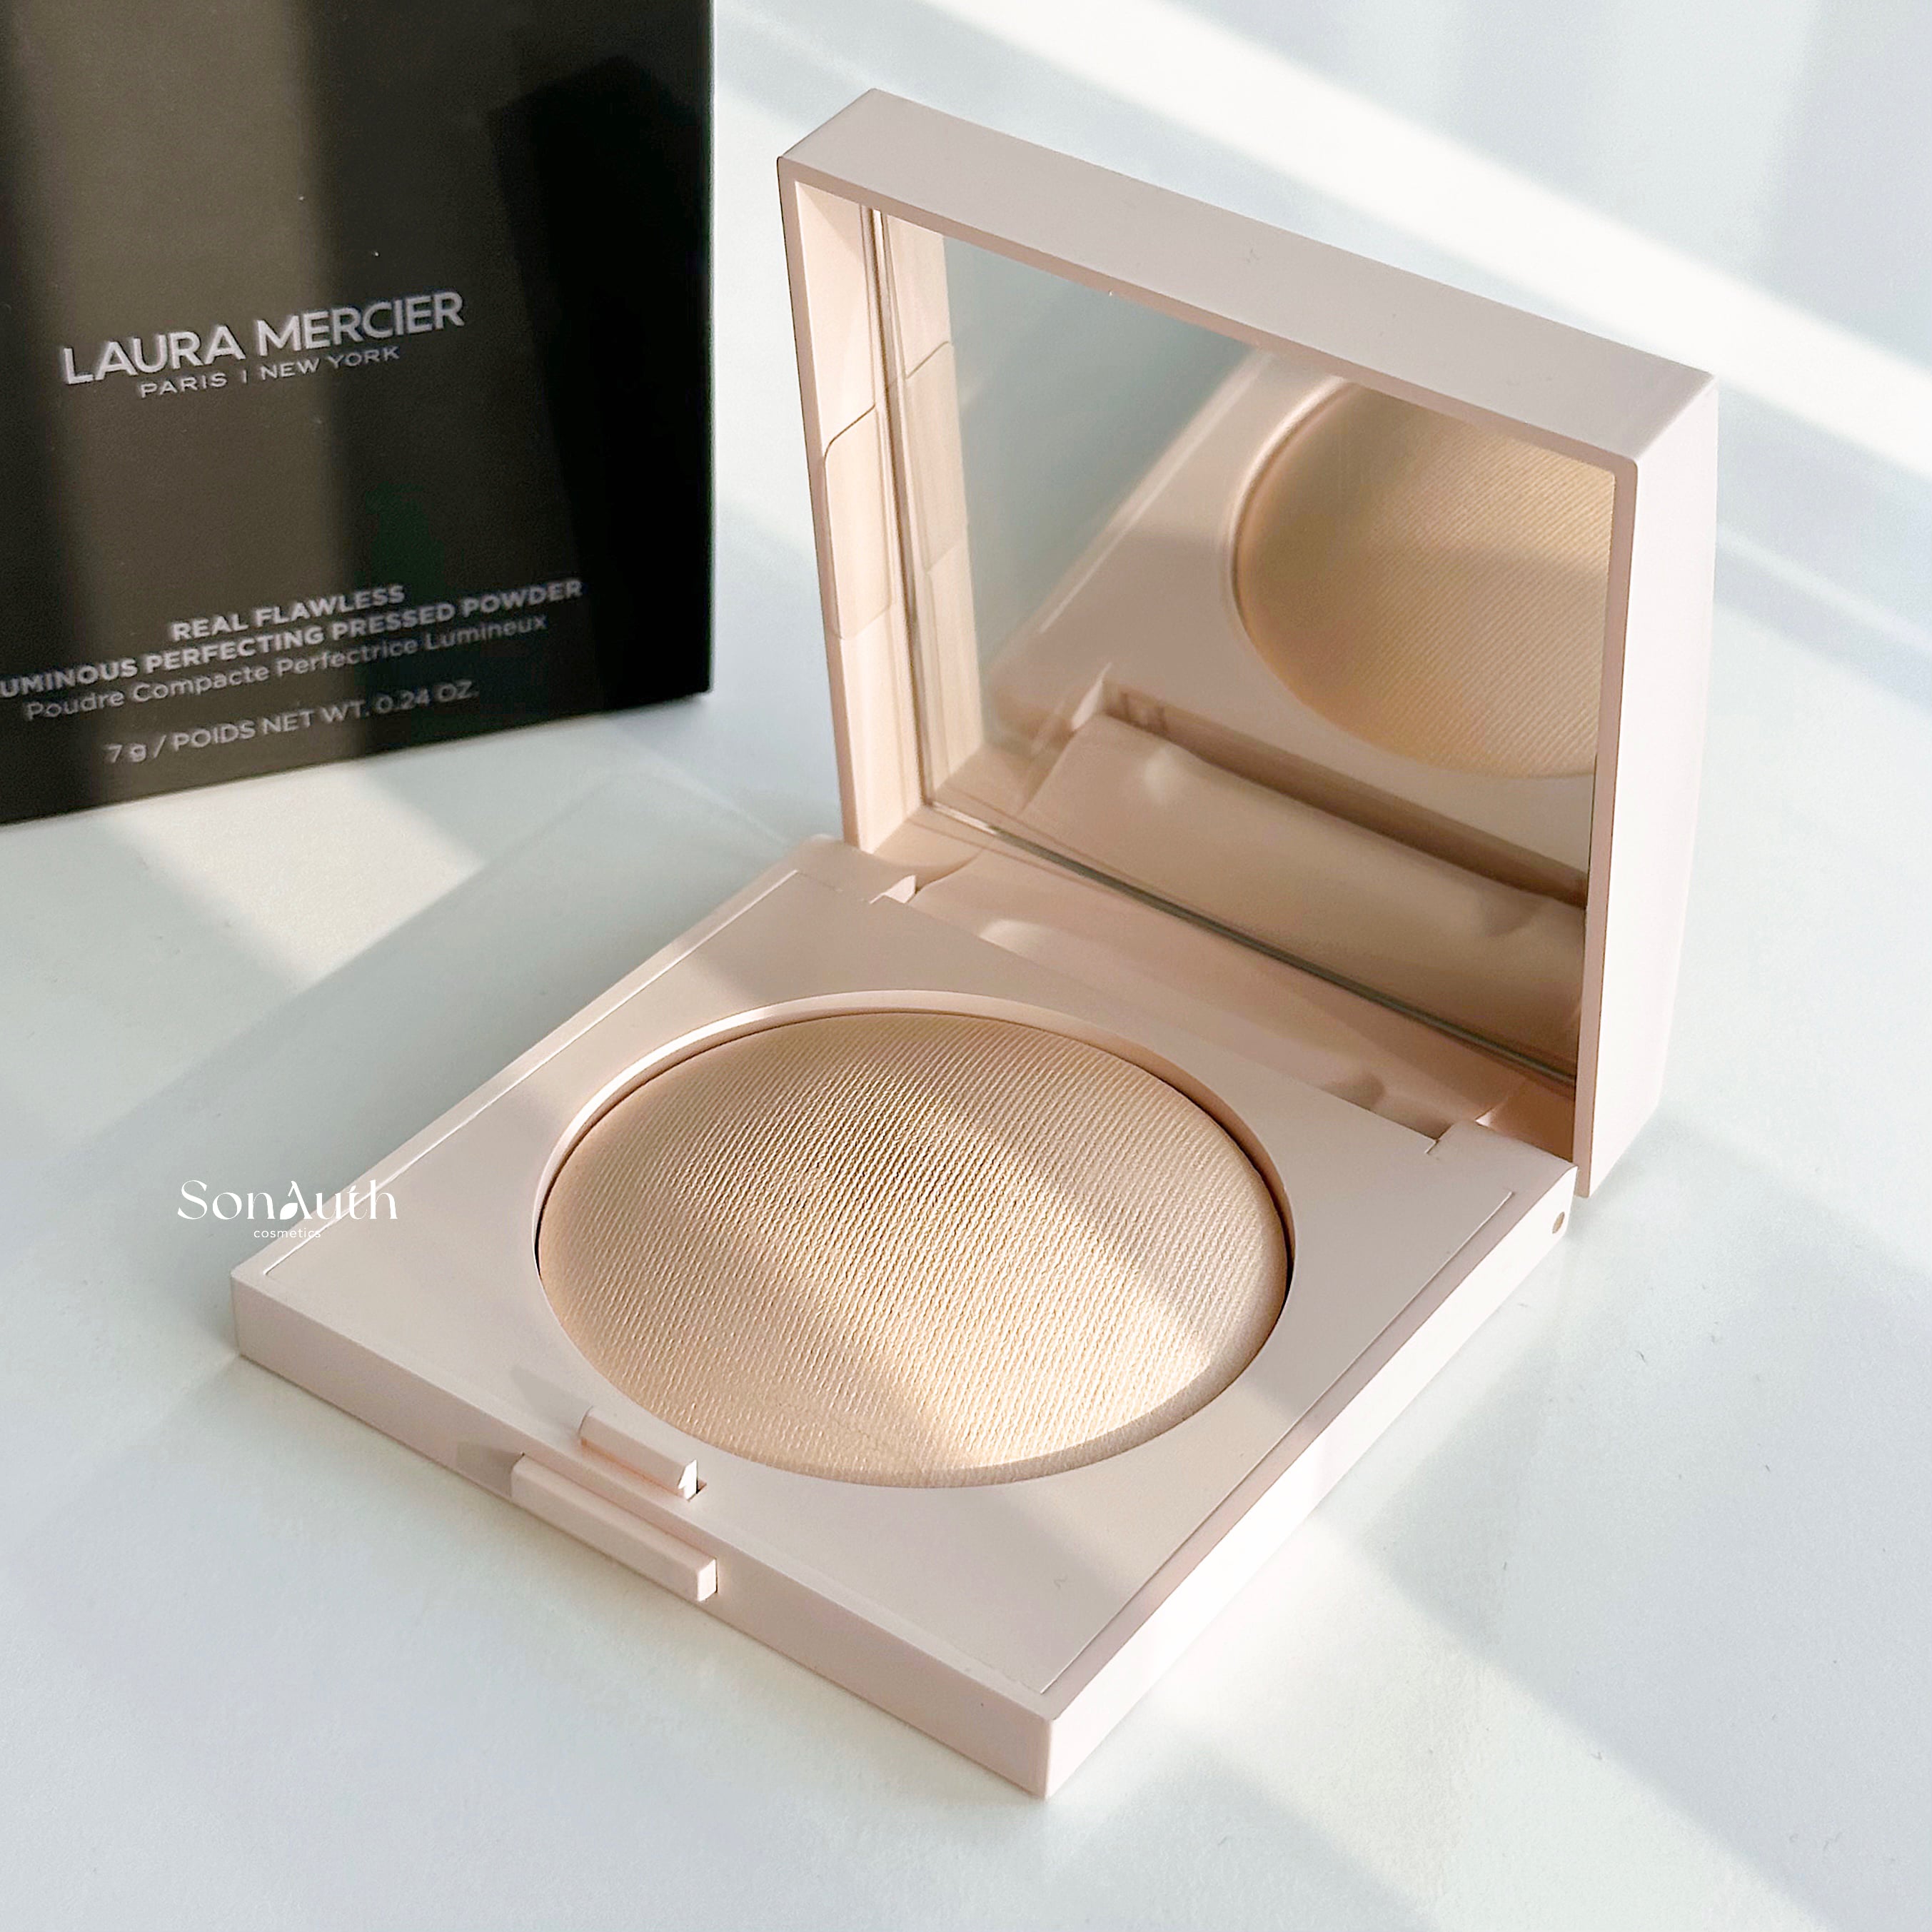 Laura Mercier Real Flawless Luminous Perfecting Pressed Powder 7g - Translucent